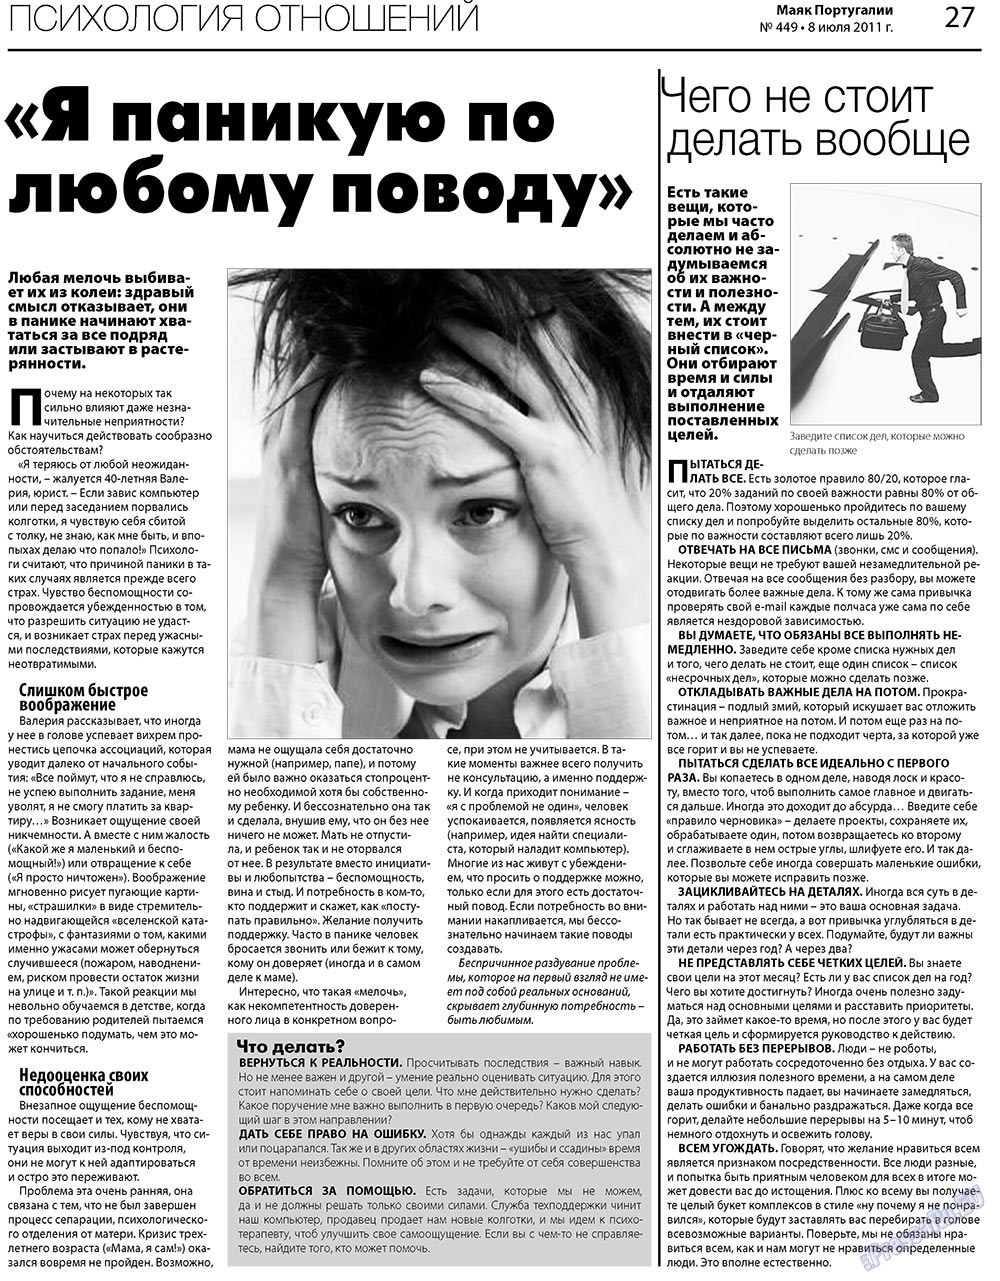 Маяк Португалии, газета. 2011 №449 стр.27